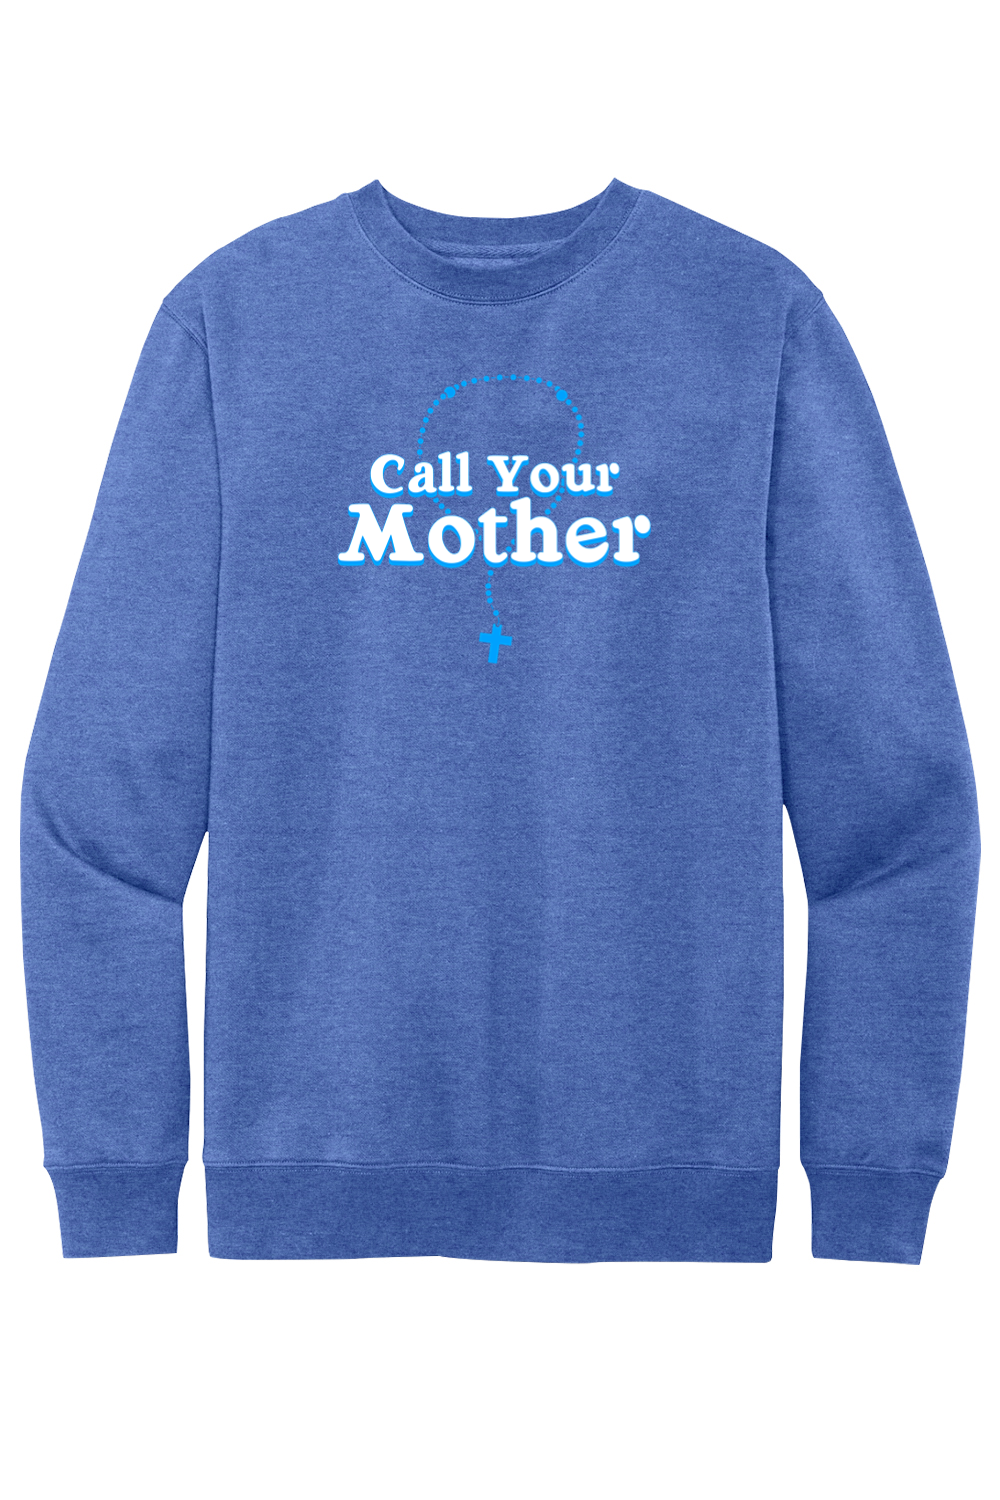 Call Your Mother - Crewneck Sweatshirt